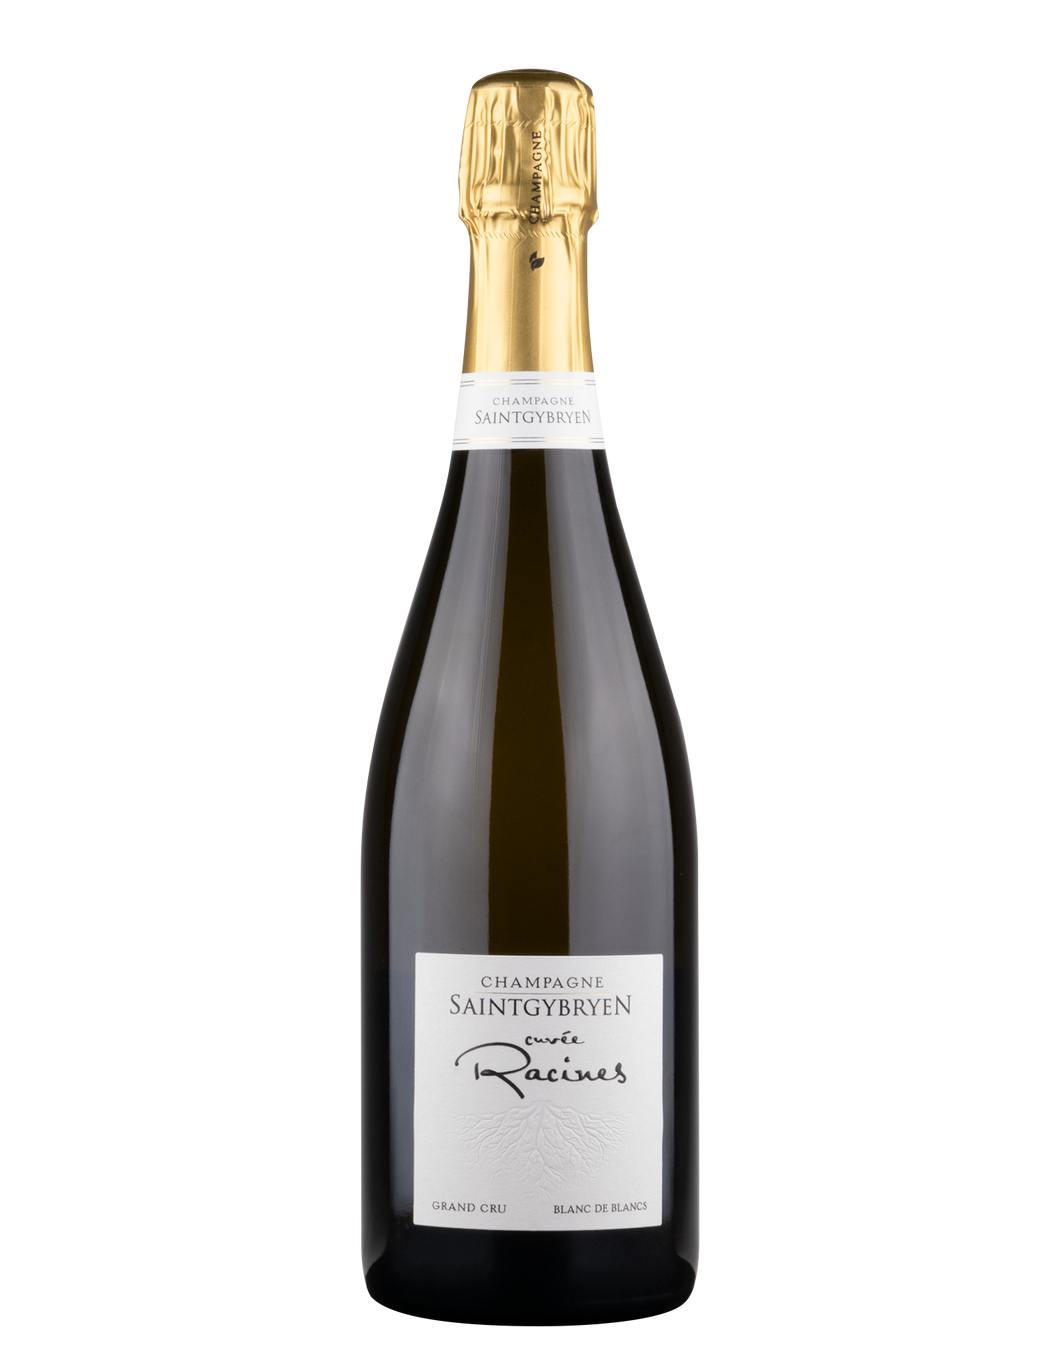 Champagne Brut Blanc de Blancs Grand Cru Cuvée Racines 2015